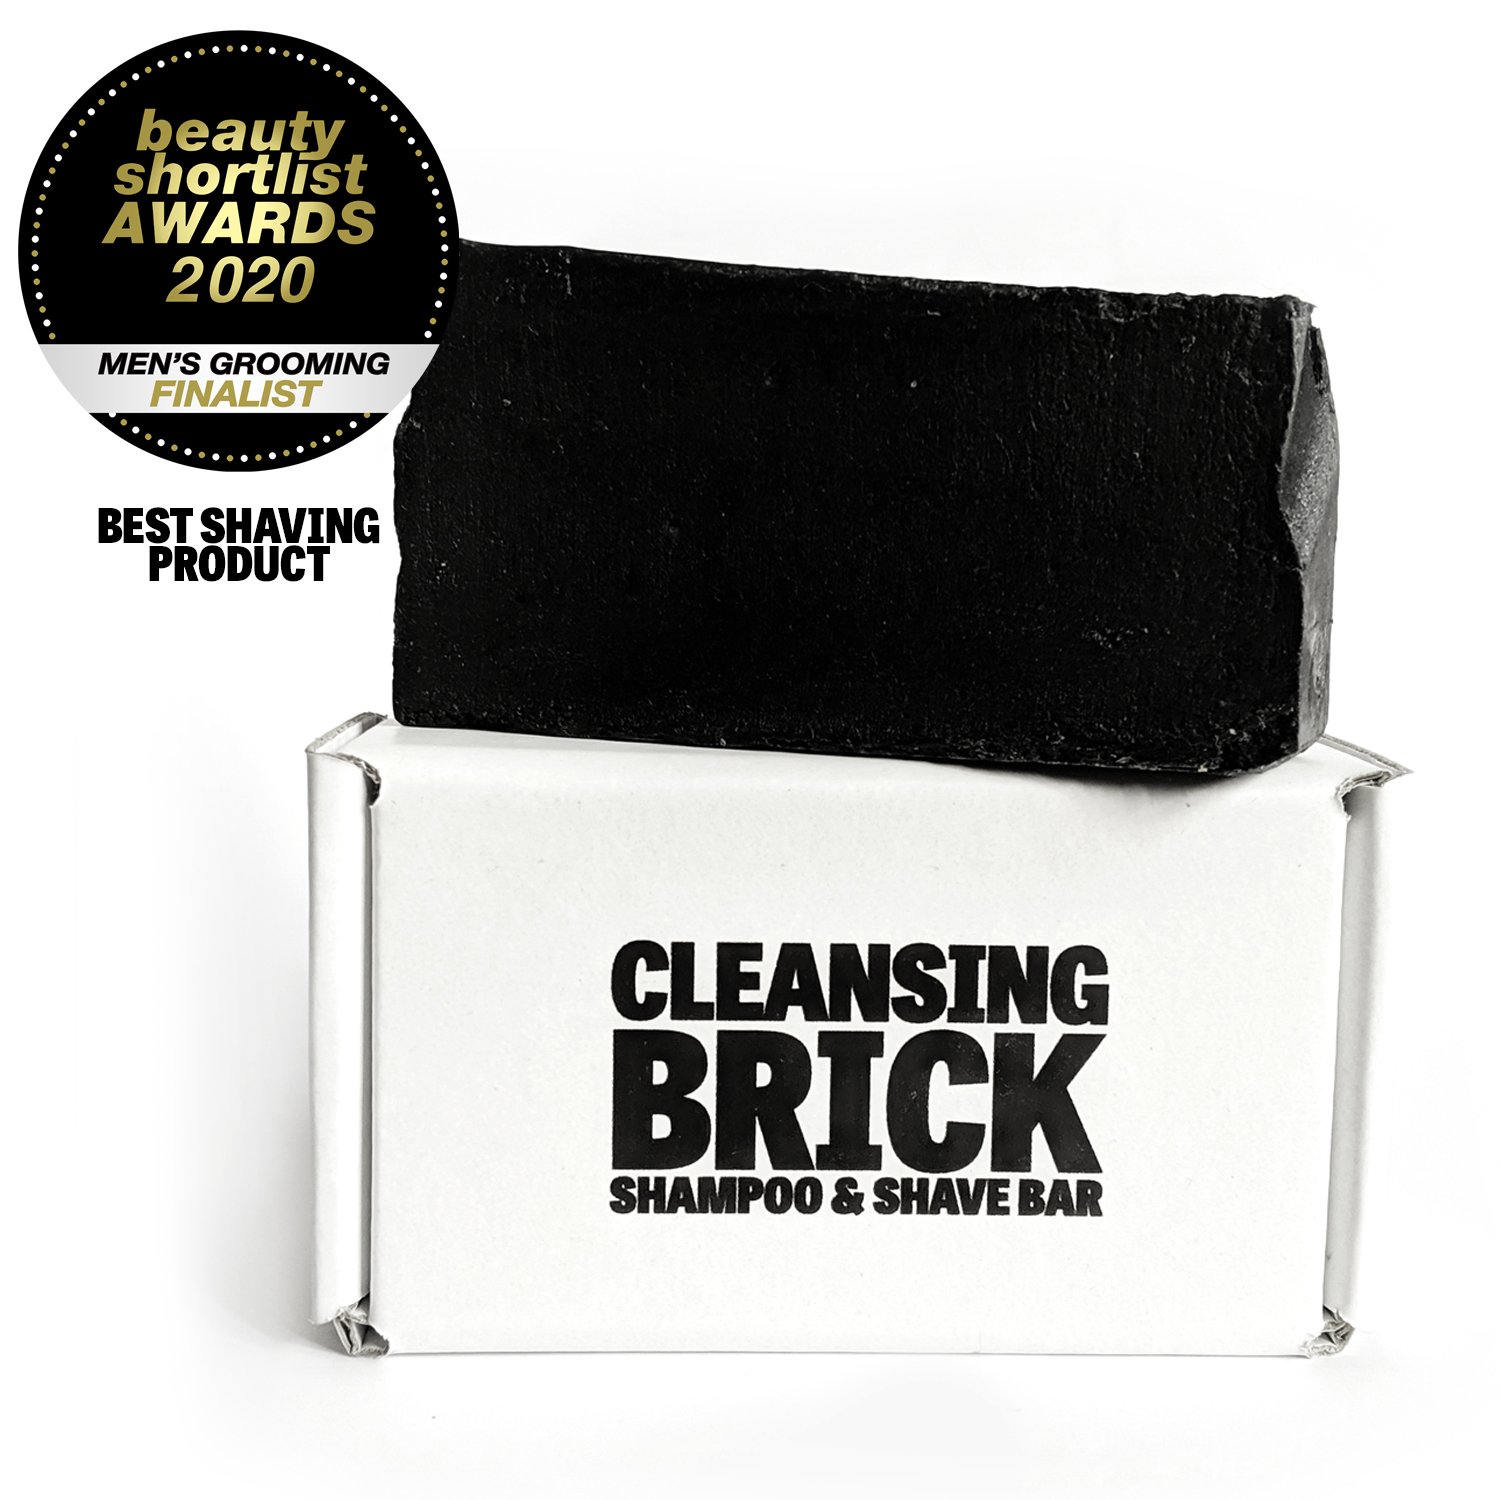 Mr. Blackman's Cleansing Brick